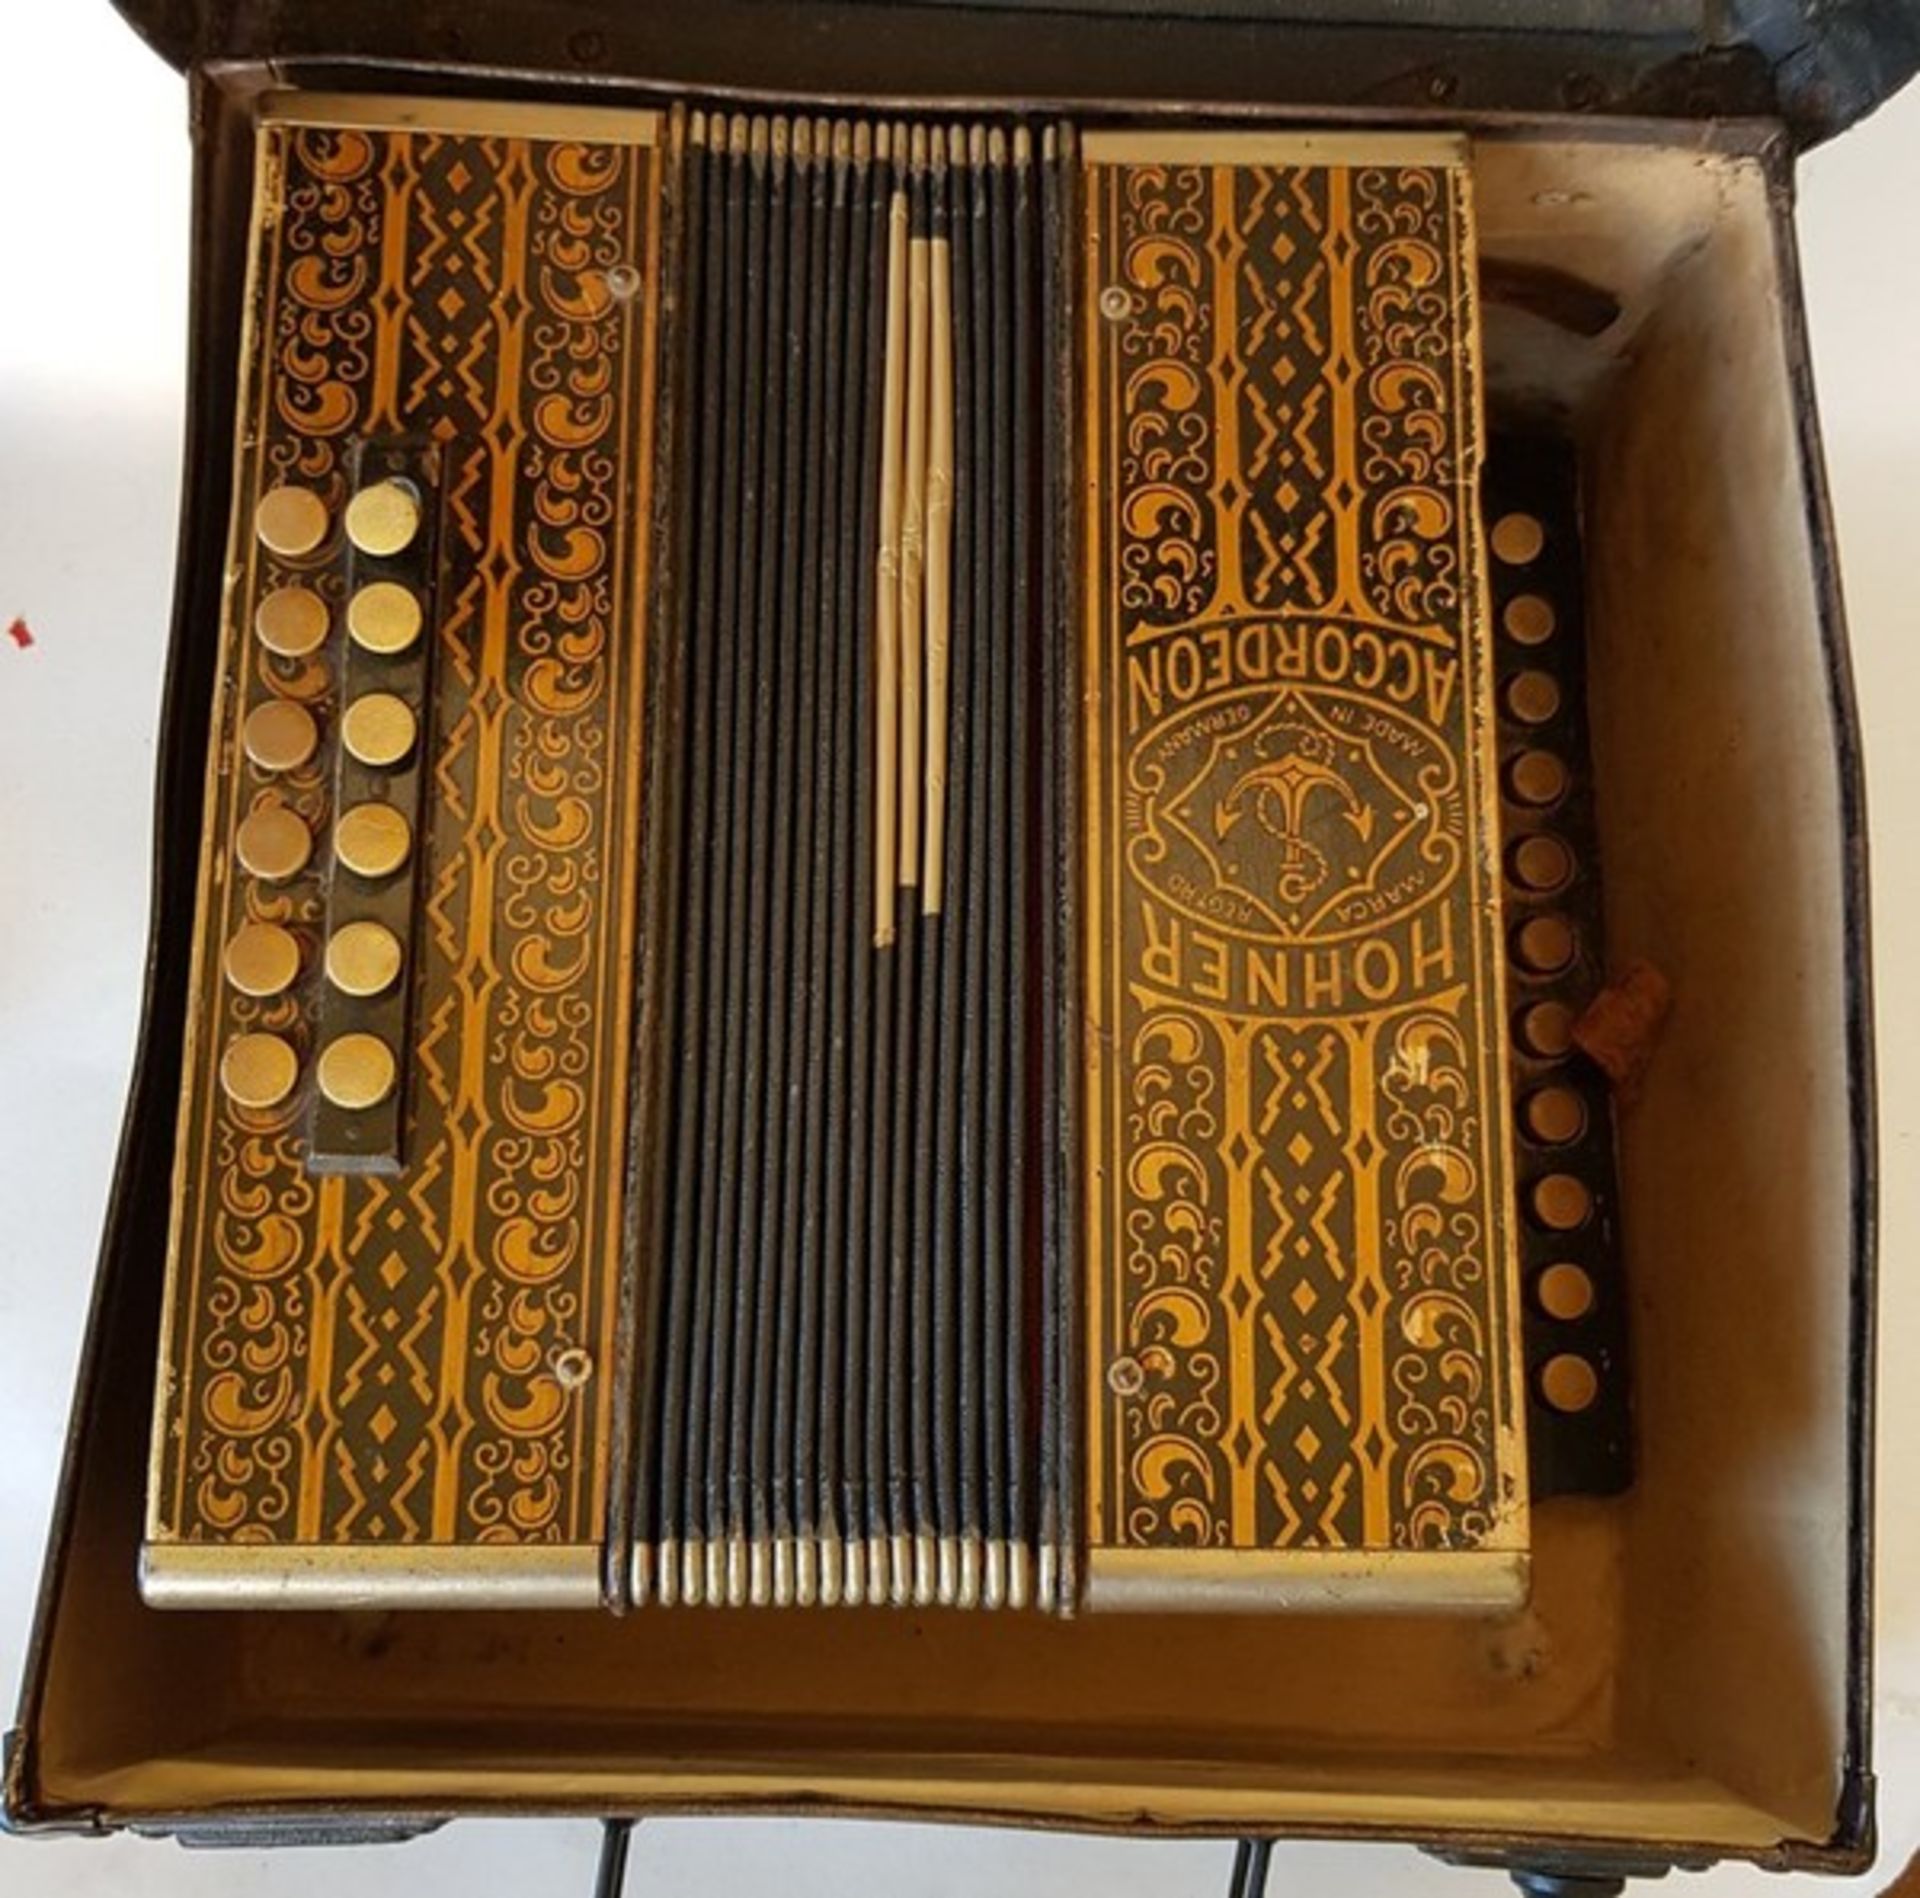 (Muziekinstrumenten) Hohner accordeonHohner accordeon, Marca Registrada, Duitsland, in koffer, circa - Bild 2 aus 5